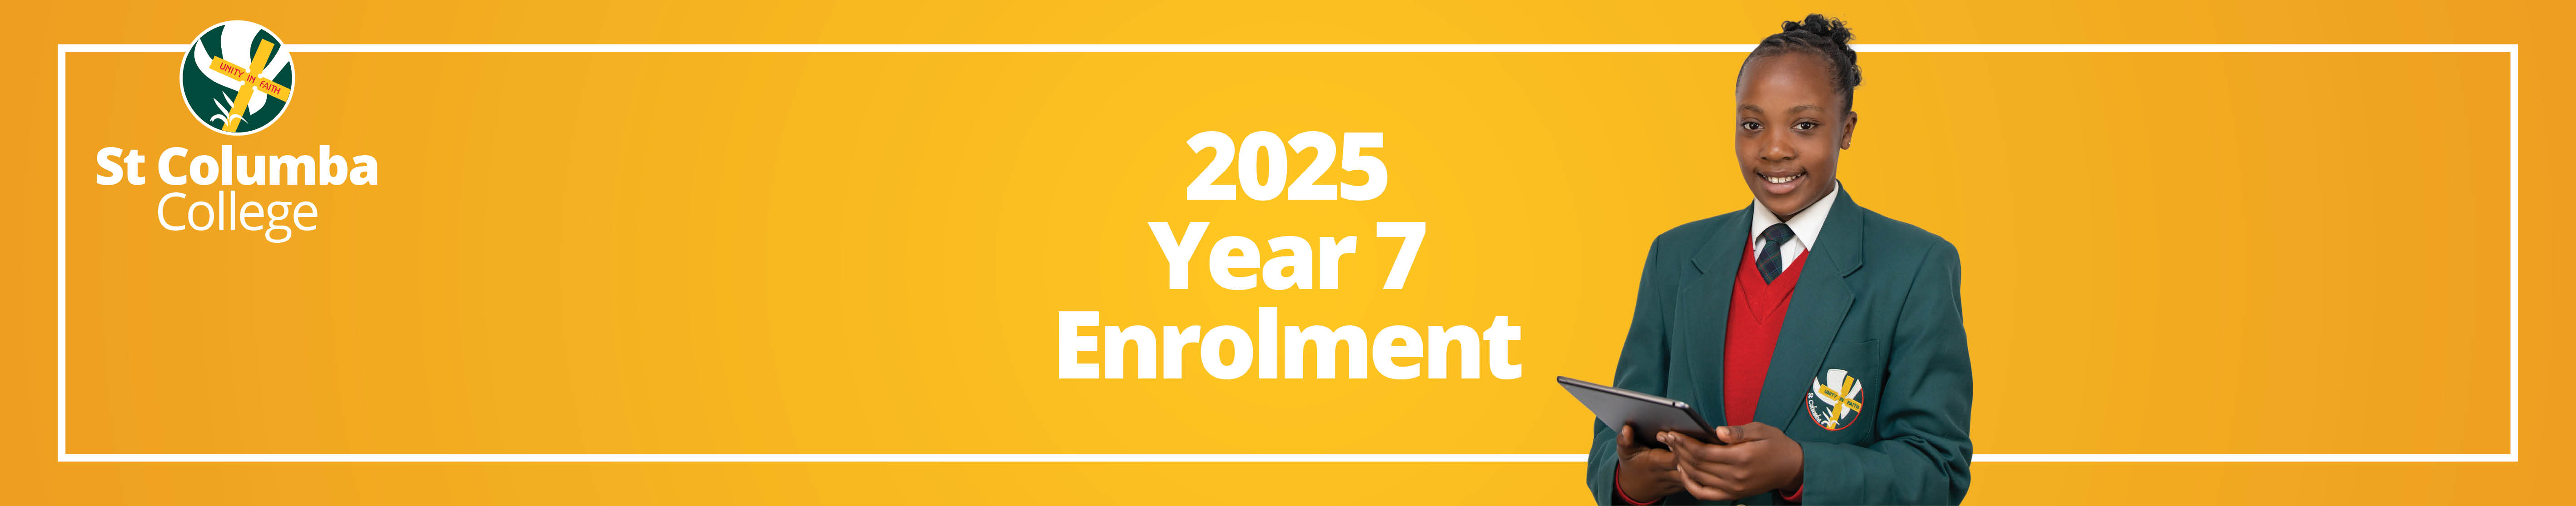 2025 Year 7 Enrolment header.jpg